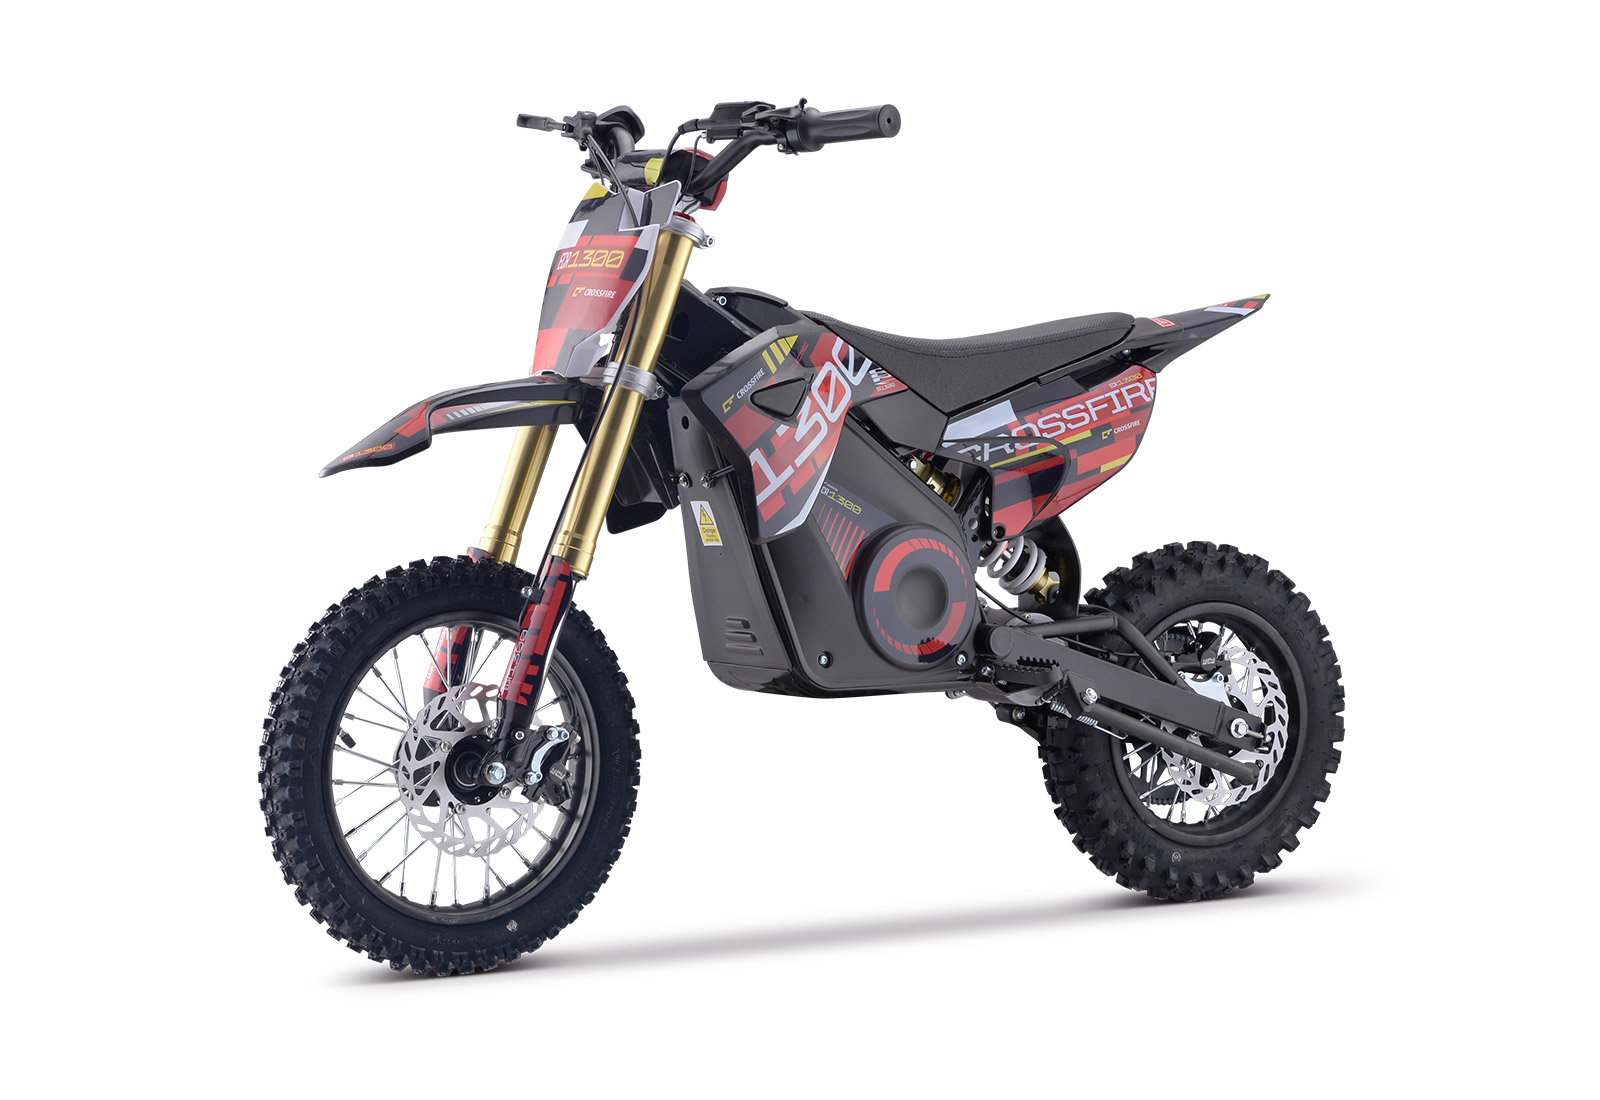 Crossfire Motorcycles UTV ATV and Quad Bikes Motorbikes - Product Range